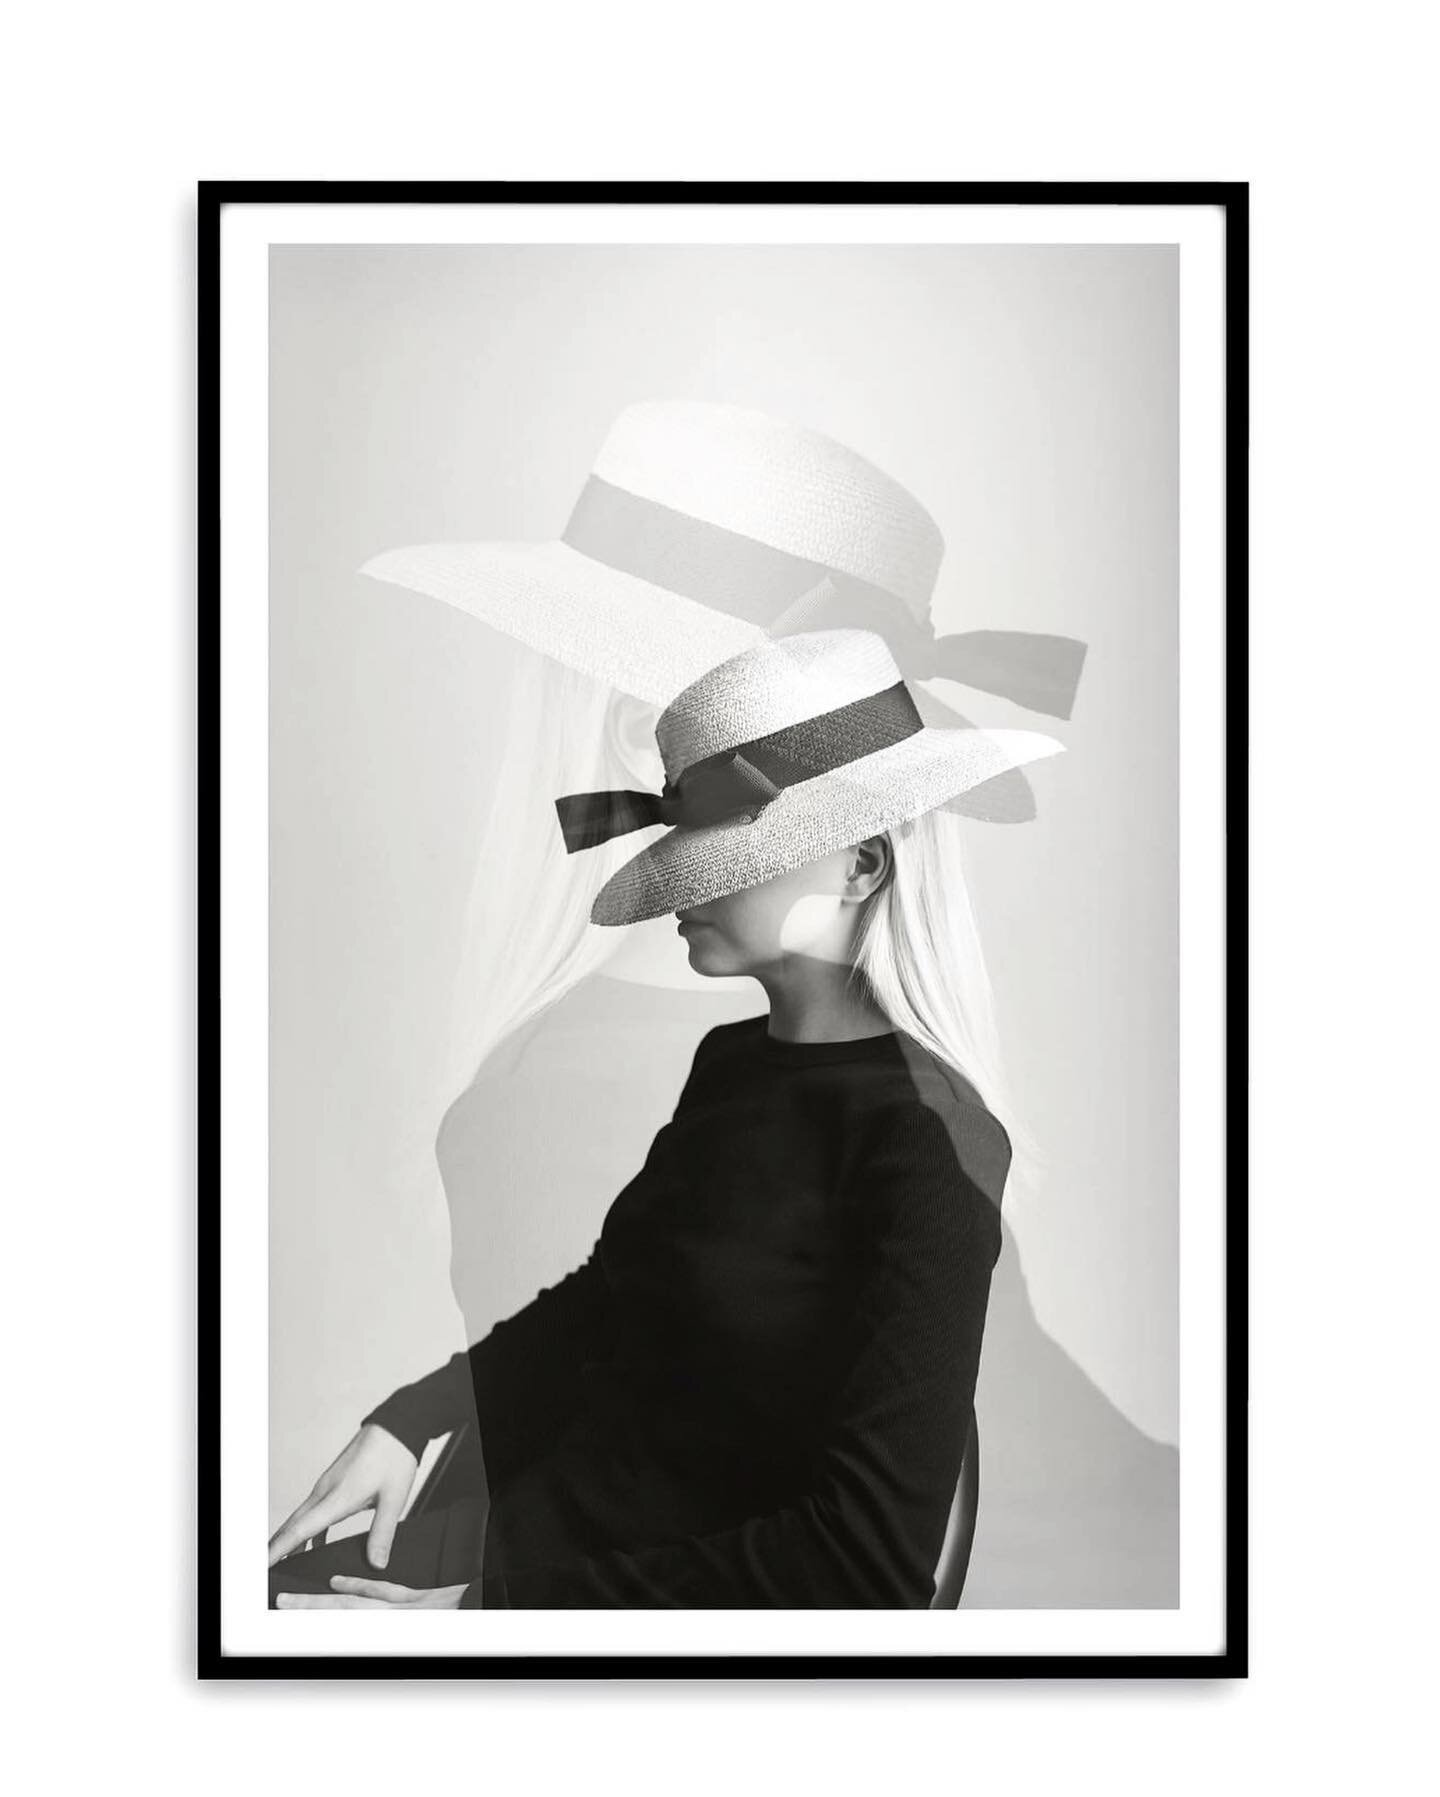 Hat lady II
New in store✨ Limited edition available.
👉🏼
https://www.thephotoarte.com/

#photoart #photoprint #photoartstore #homedecor #homeinspiration #wallart #scandinavianstyle #photoartist #sisustus #artprint #handmade #decor #nikon #poster #pi